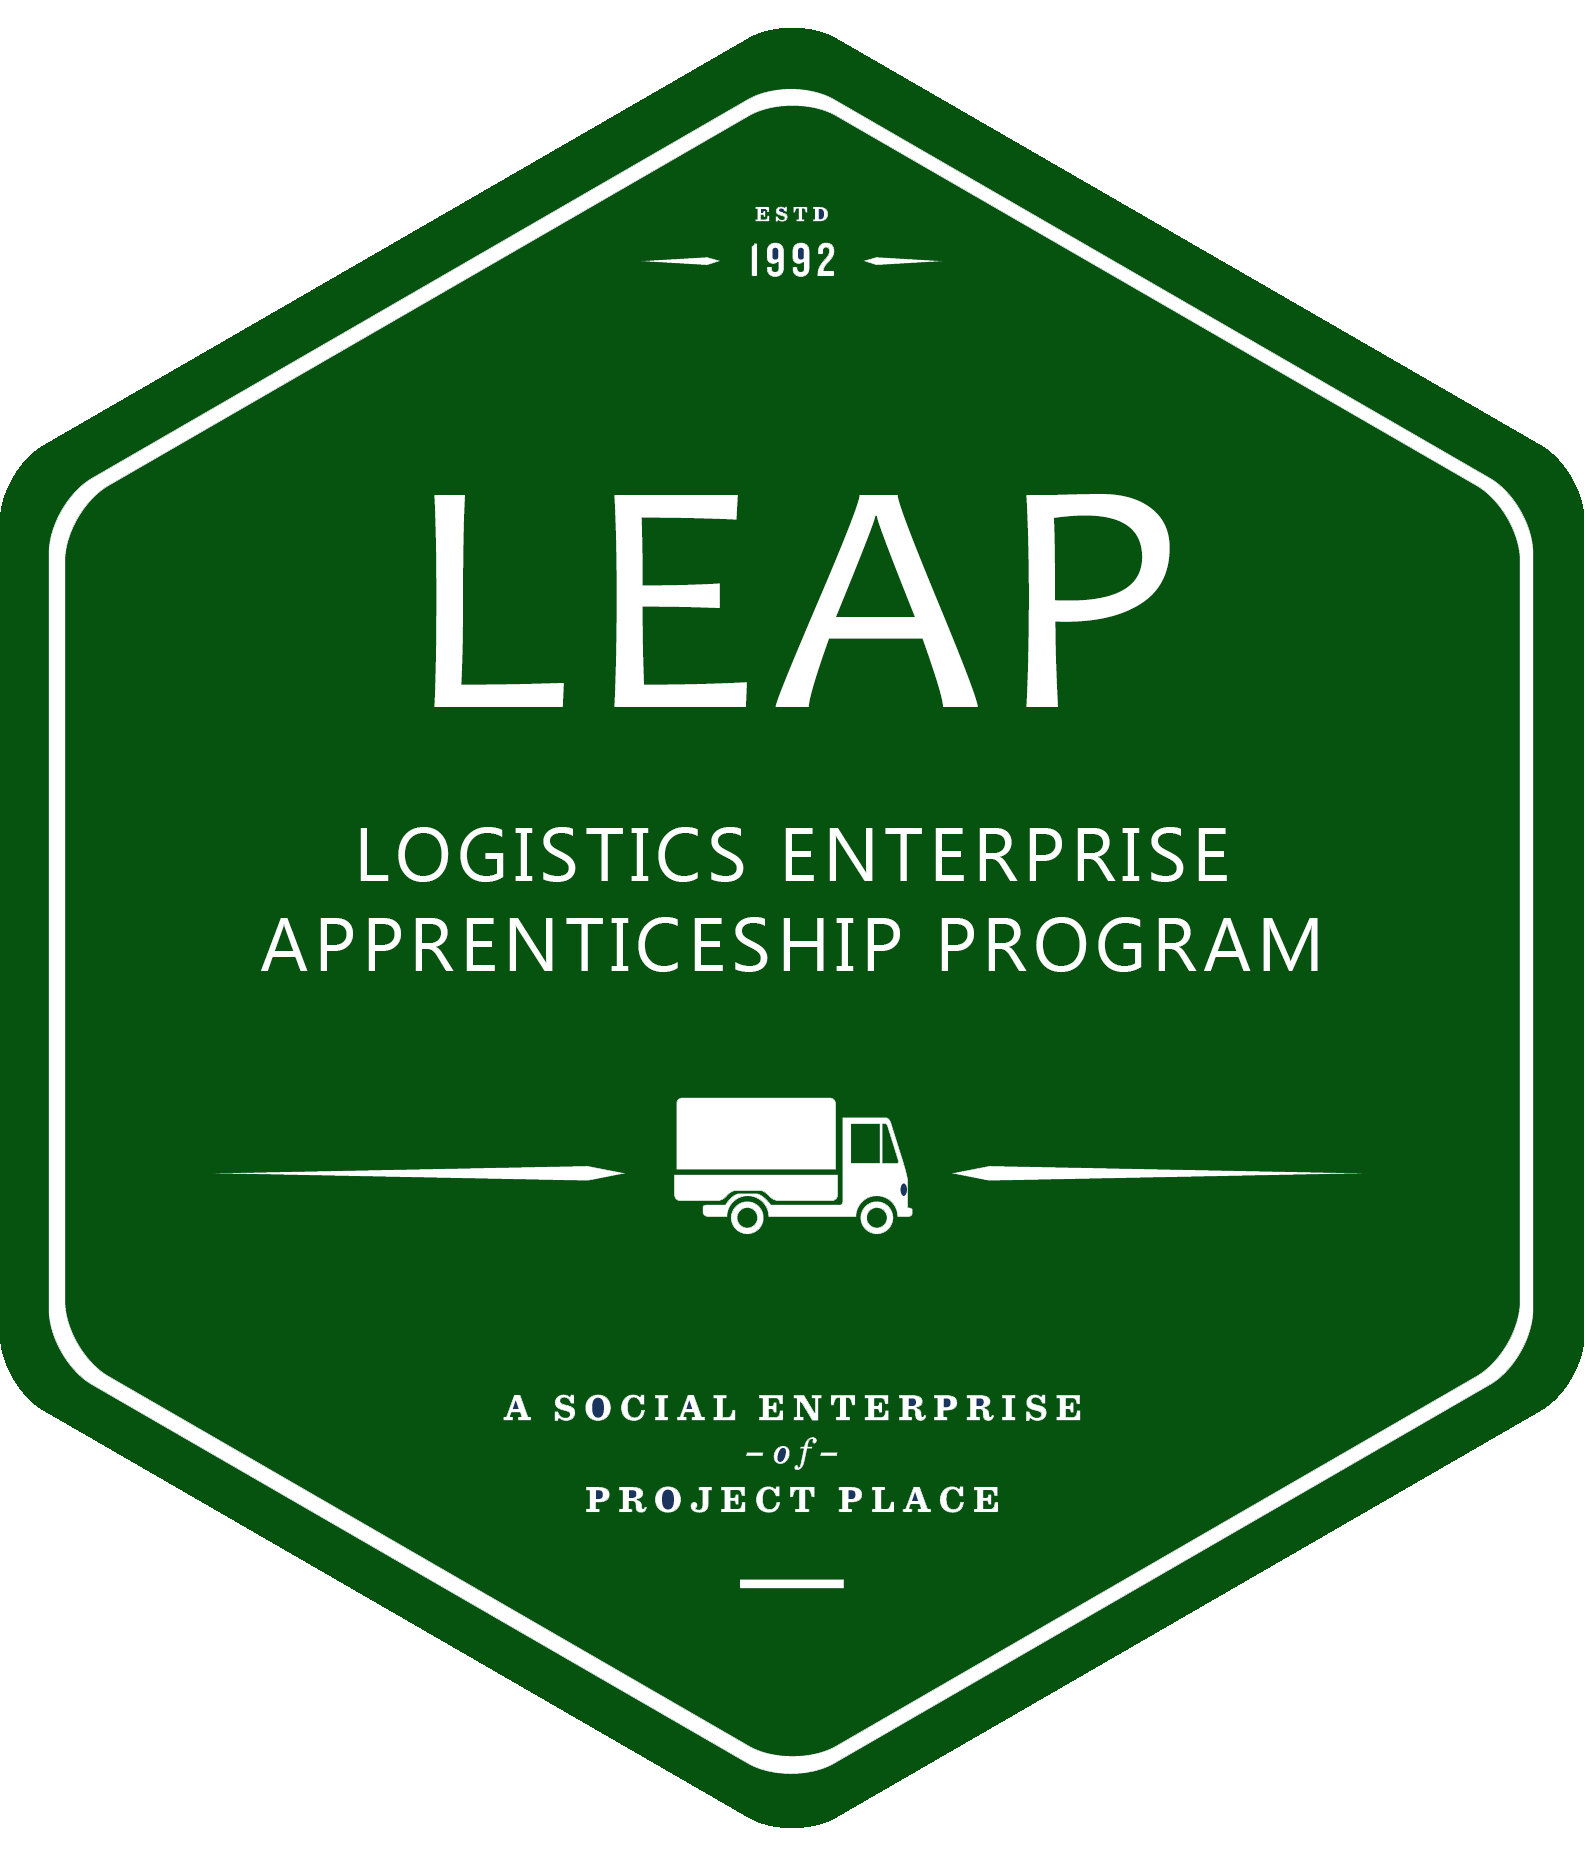 Logistics enterprise apprenticeship program logo, dark green hexagon